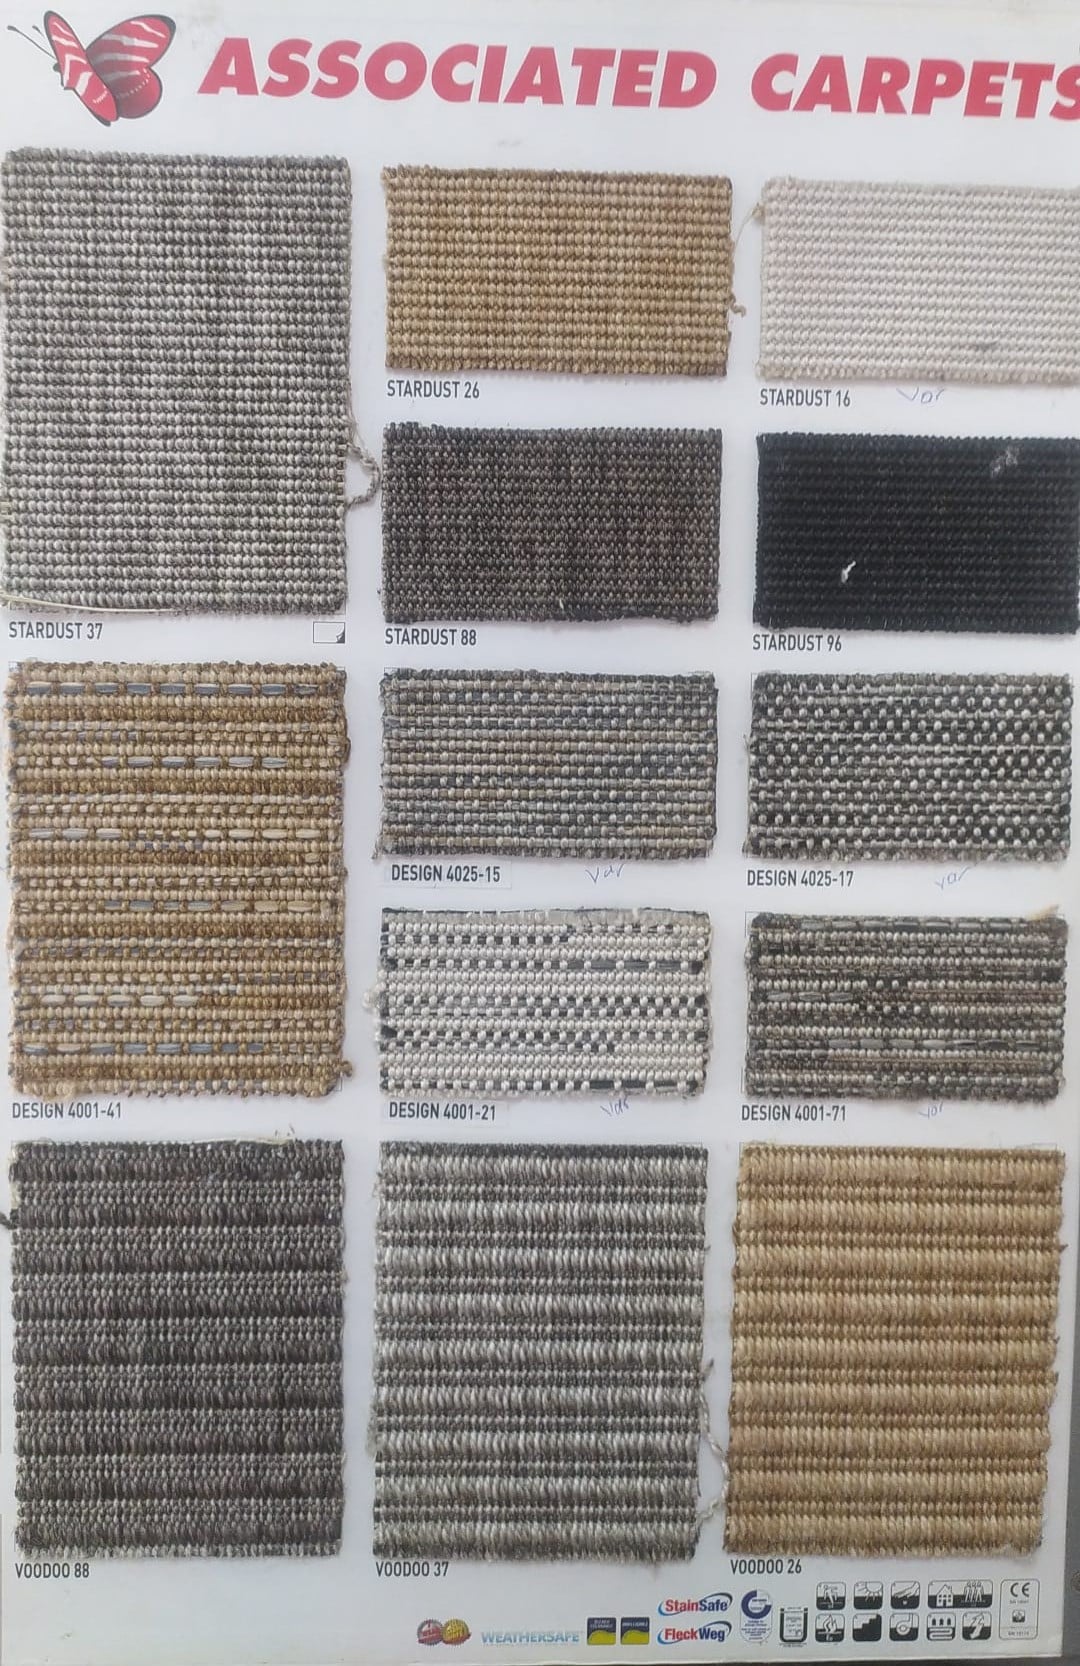 Associated carpet sisal hali katalog